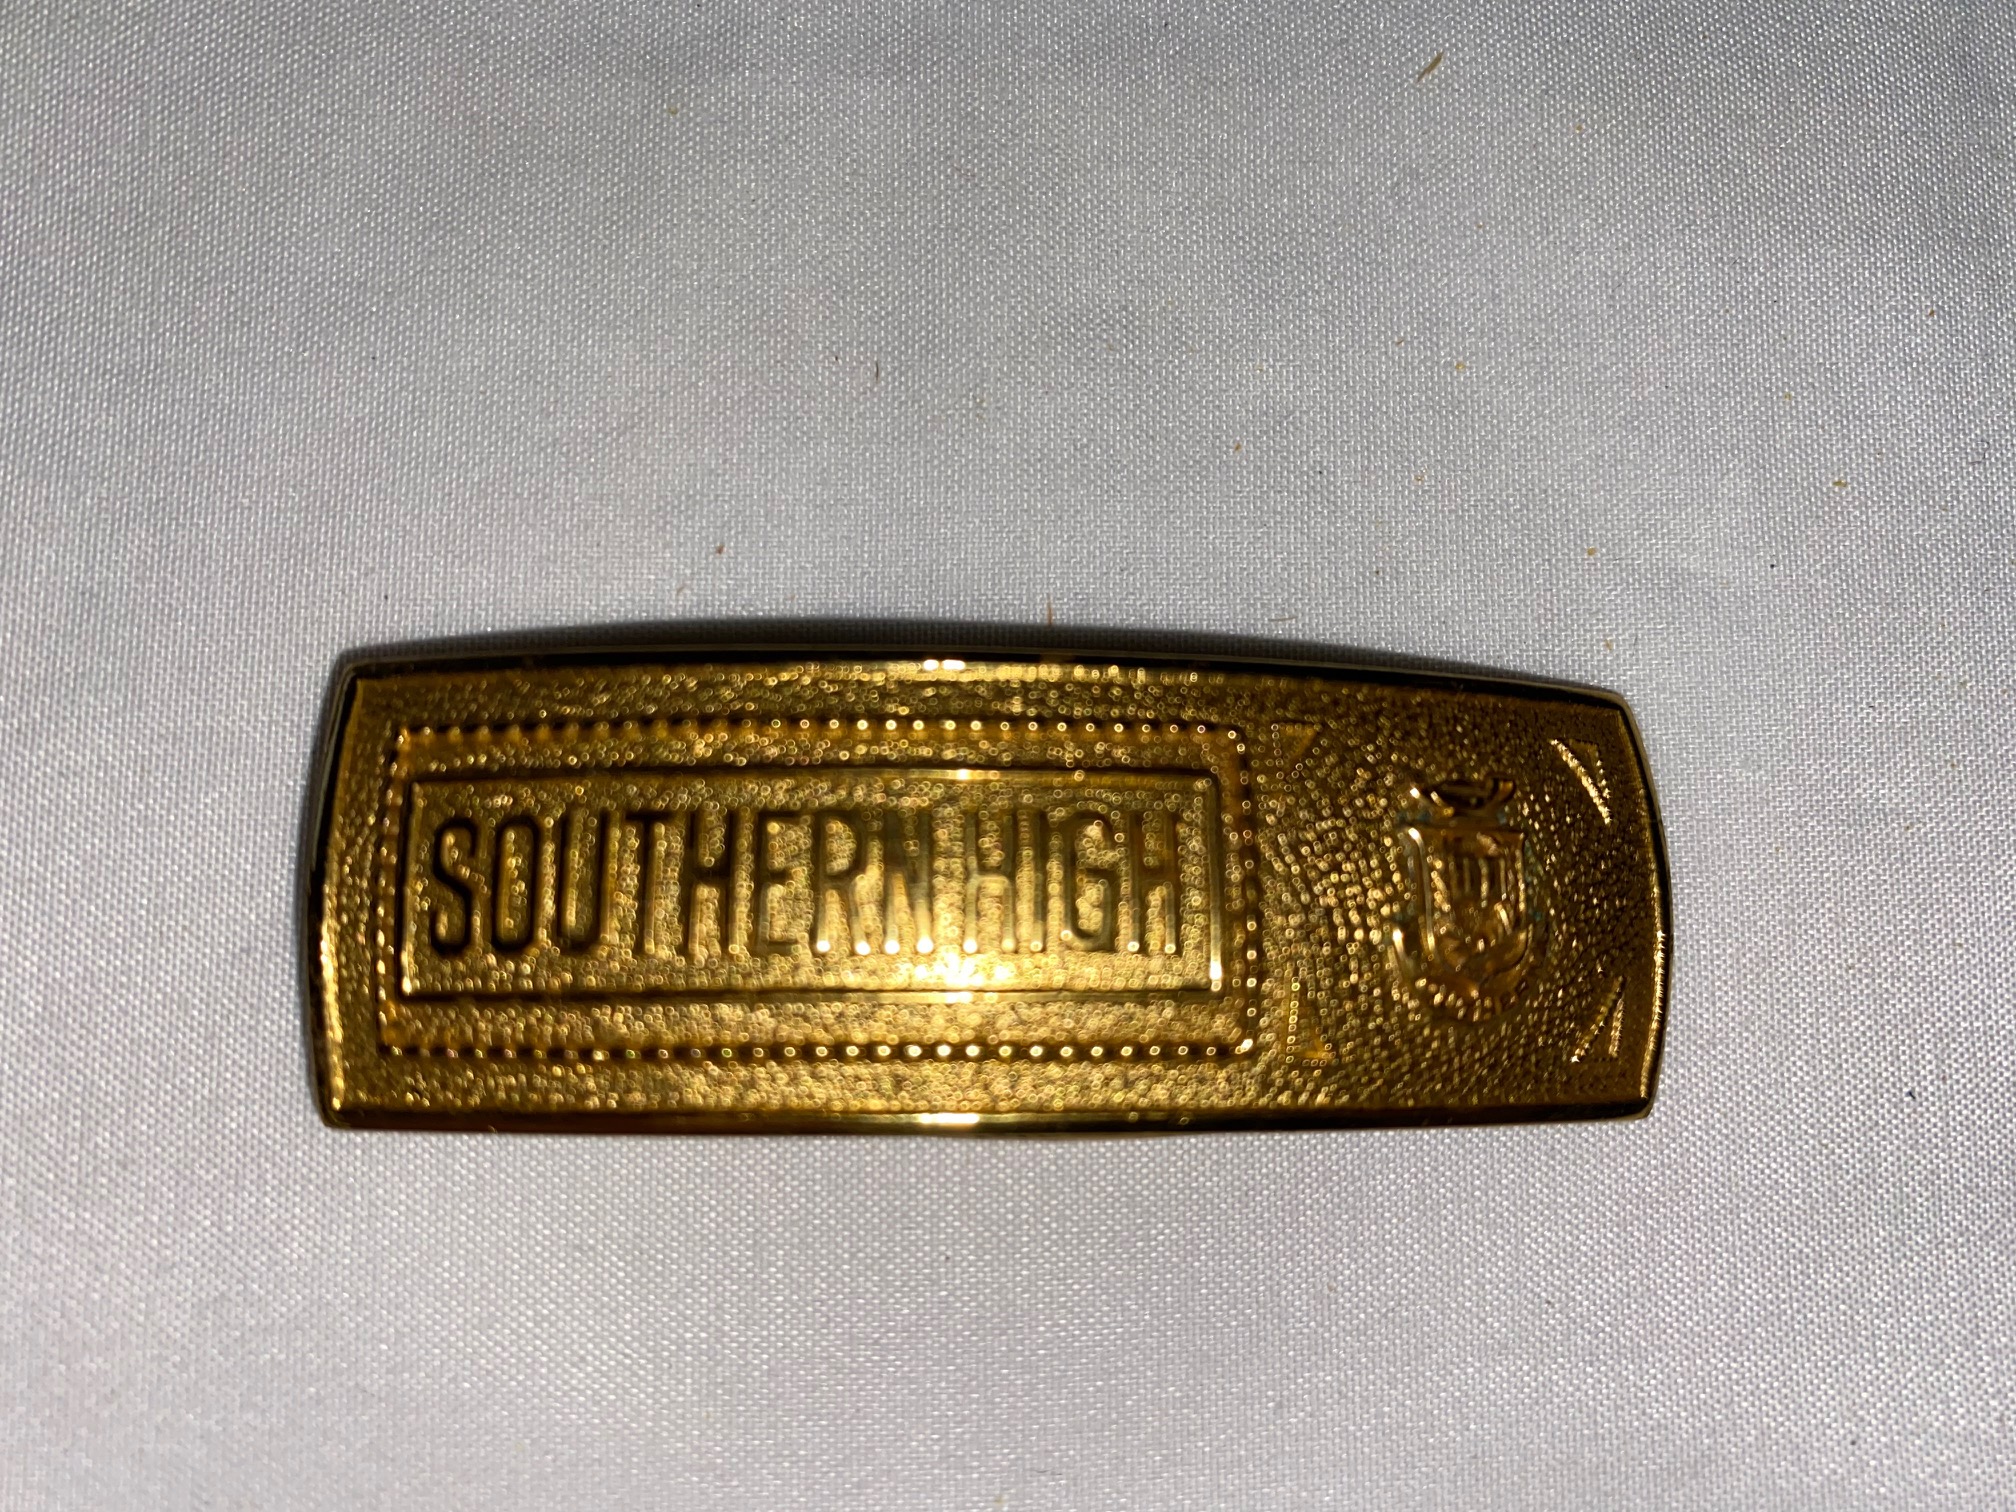 NOS Vintage Southern High Baltimore, MD Brass Belt Buckle